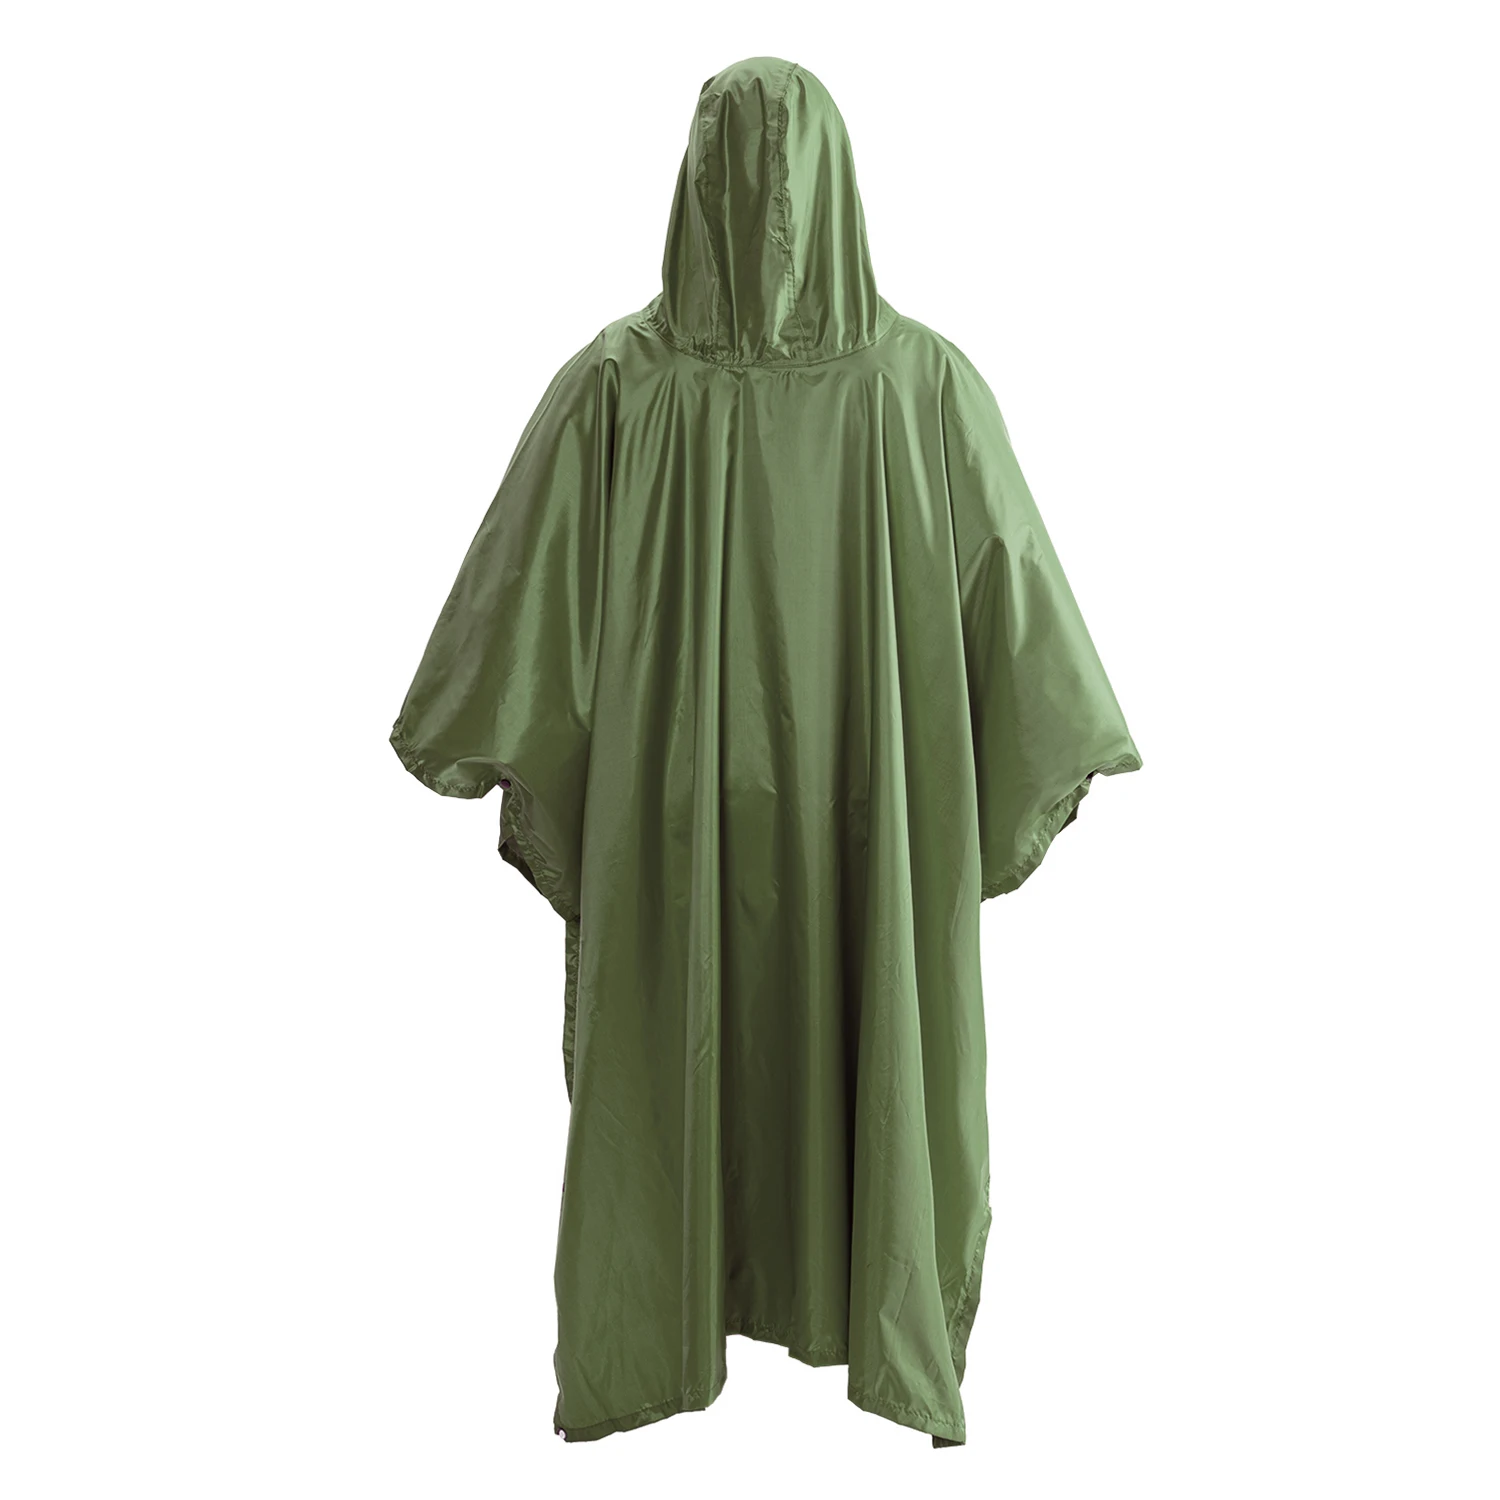 Practical Hooded Raincoat Lightweight Portable Long For Outdoor Raincoat Rain Jacket Multifunctional Outdoor Rain Clothes